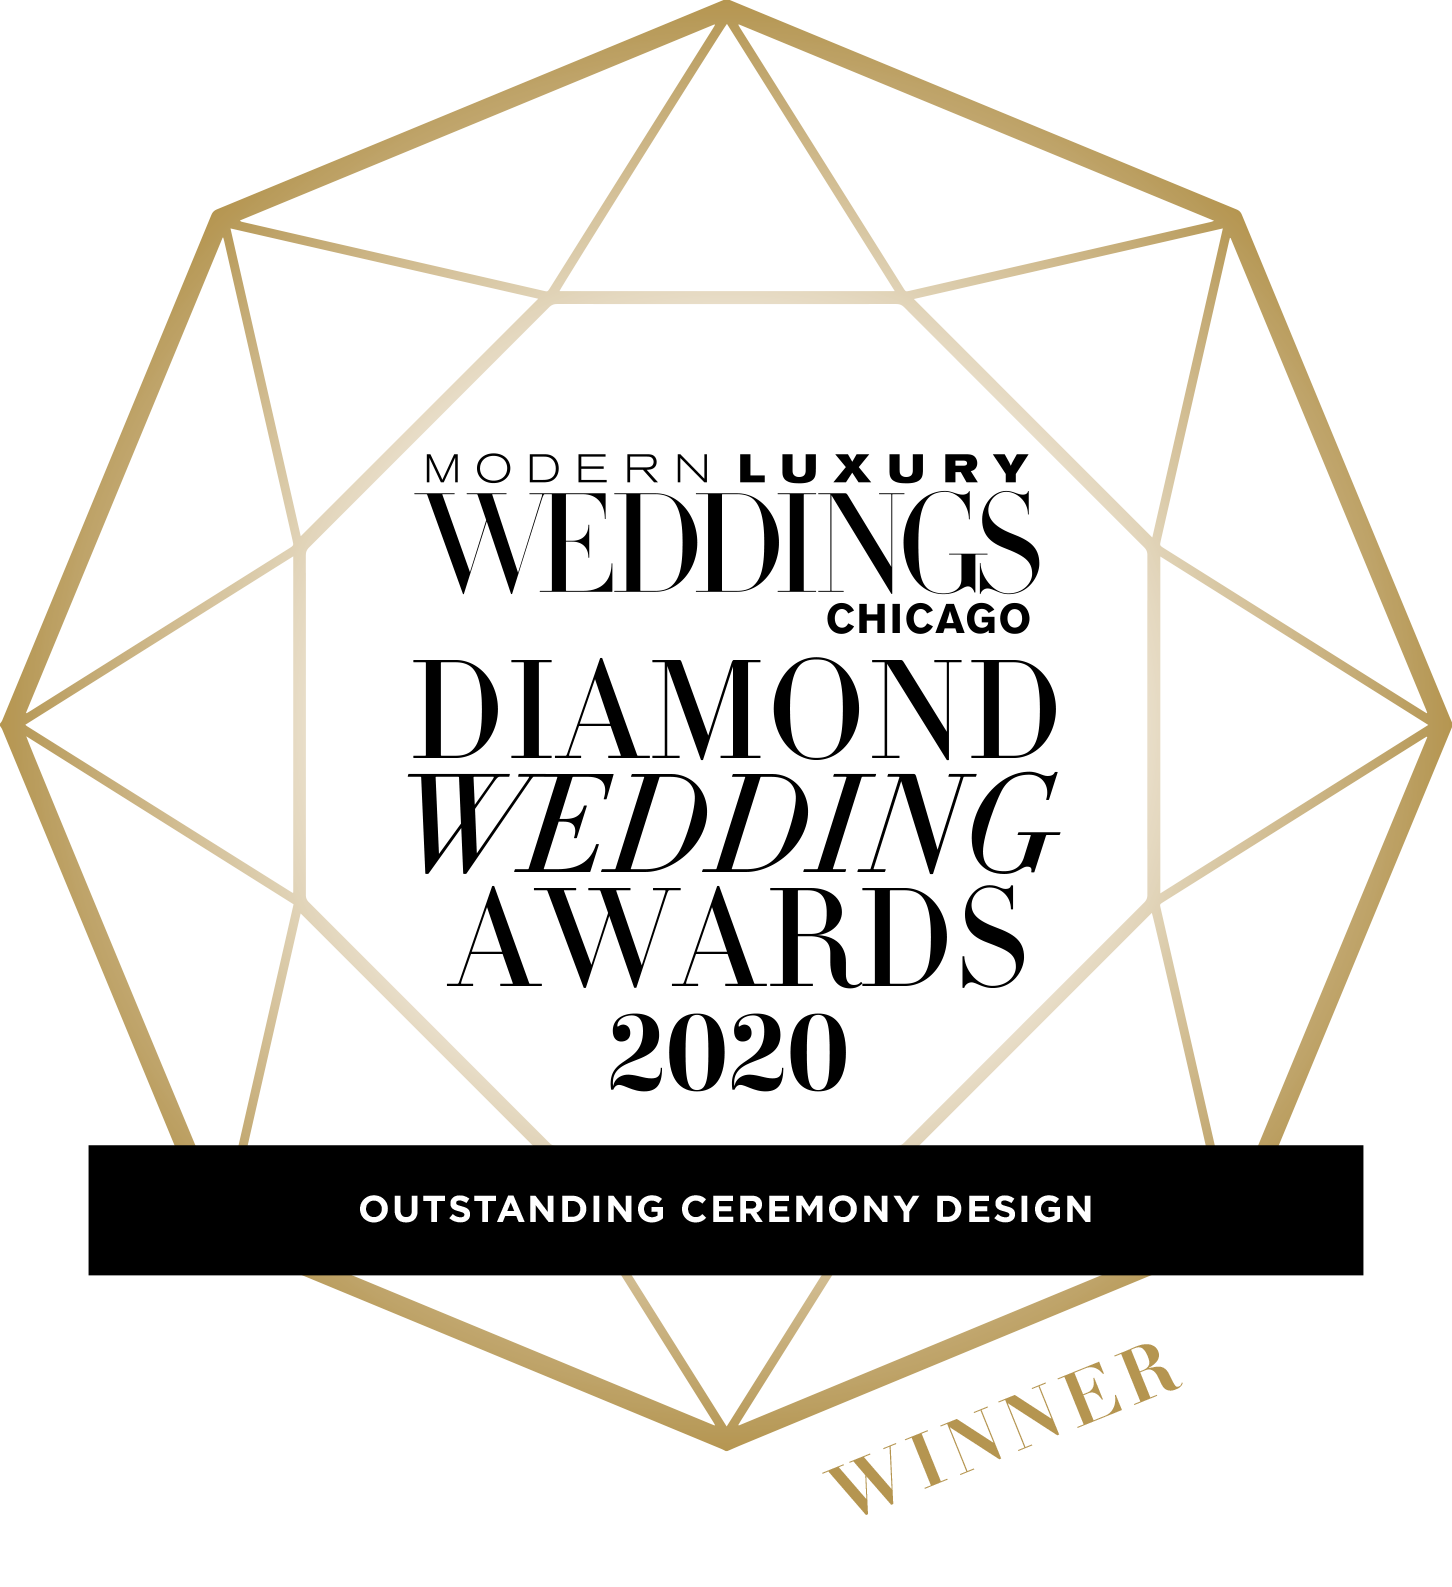 2020 ModLux Weddings Diamond Wedding Award for Outstanding Ceremony Design